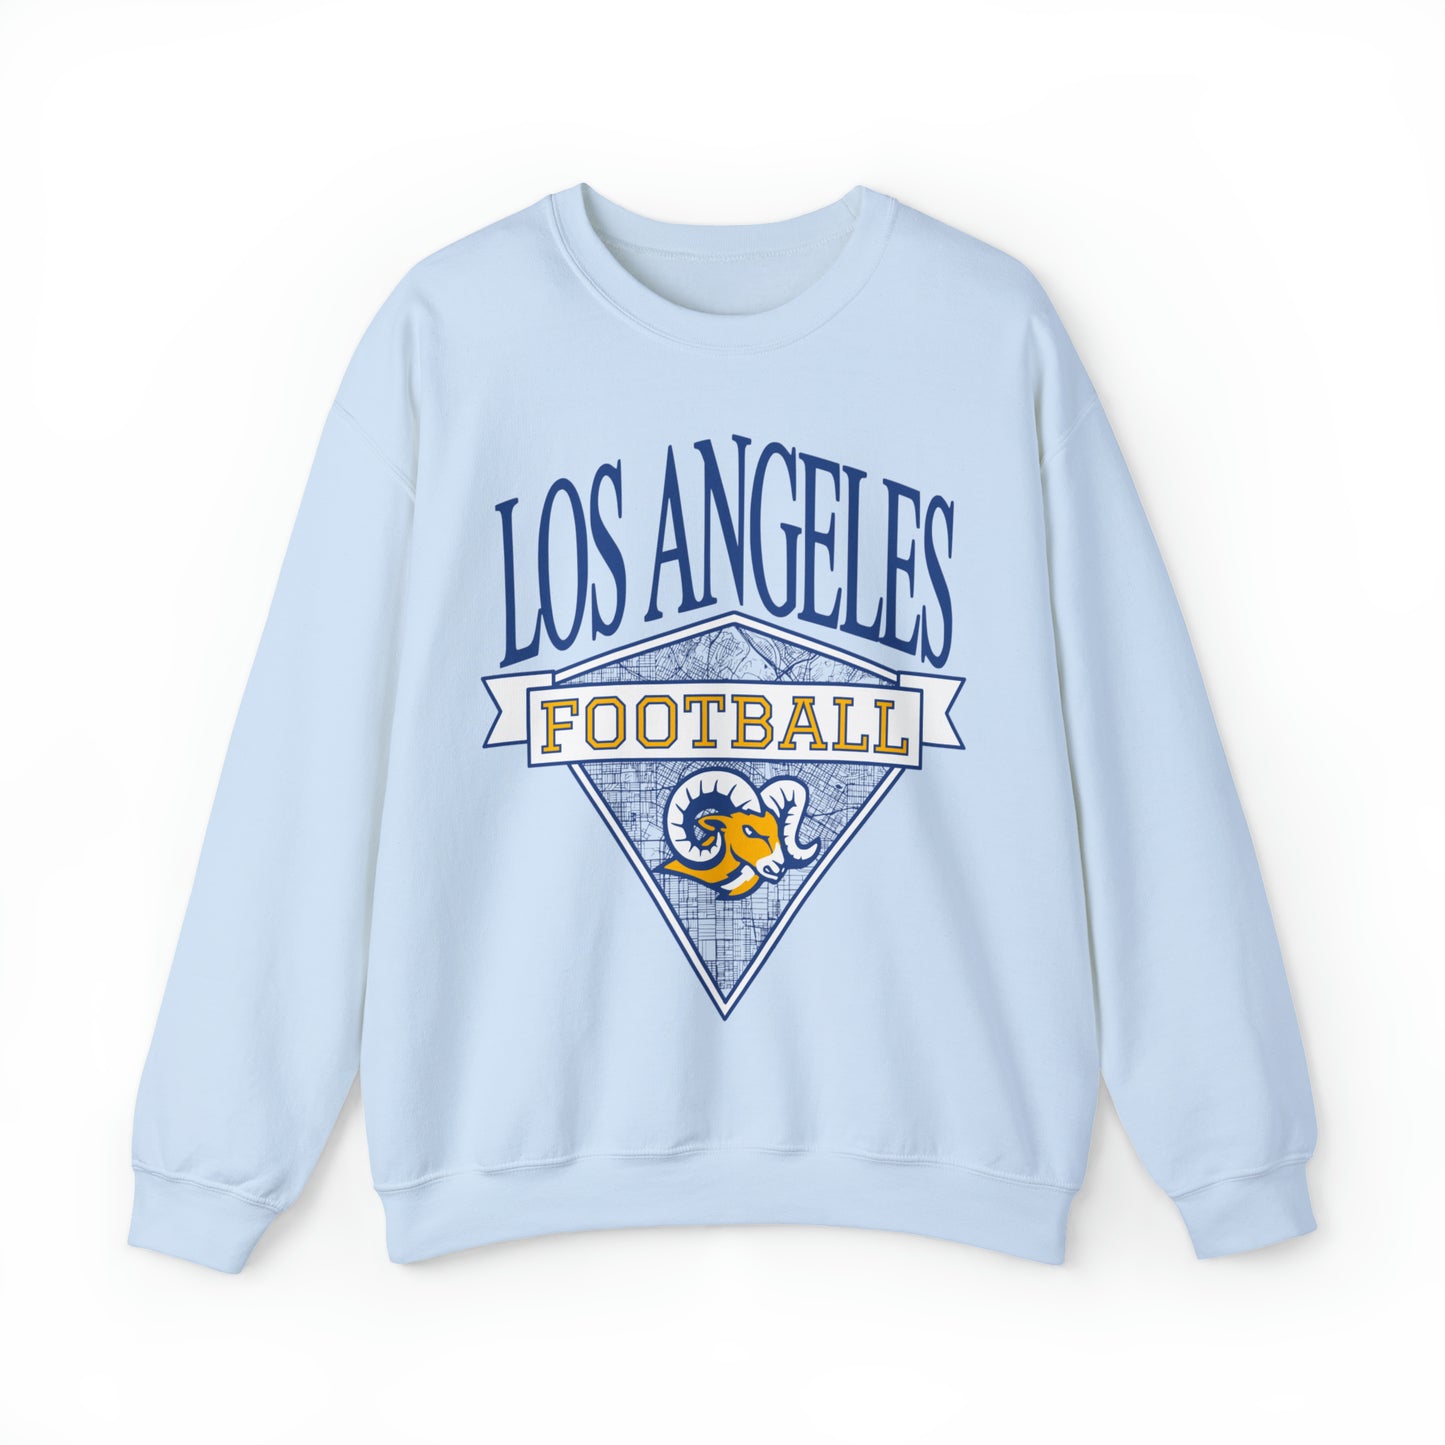 Vintage Los Angeles Rams Crewneck Sweatshirt - Retro California Football Apparel - Men's & Women's Unisex Sizing